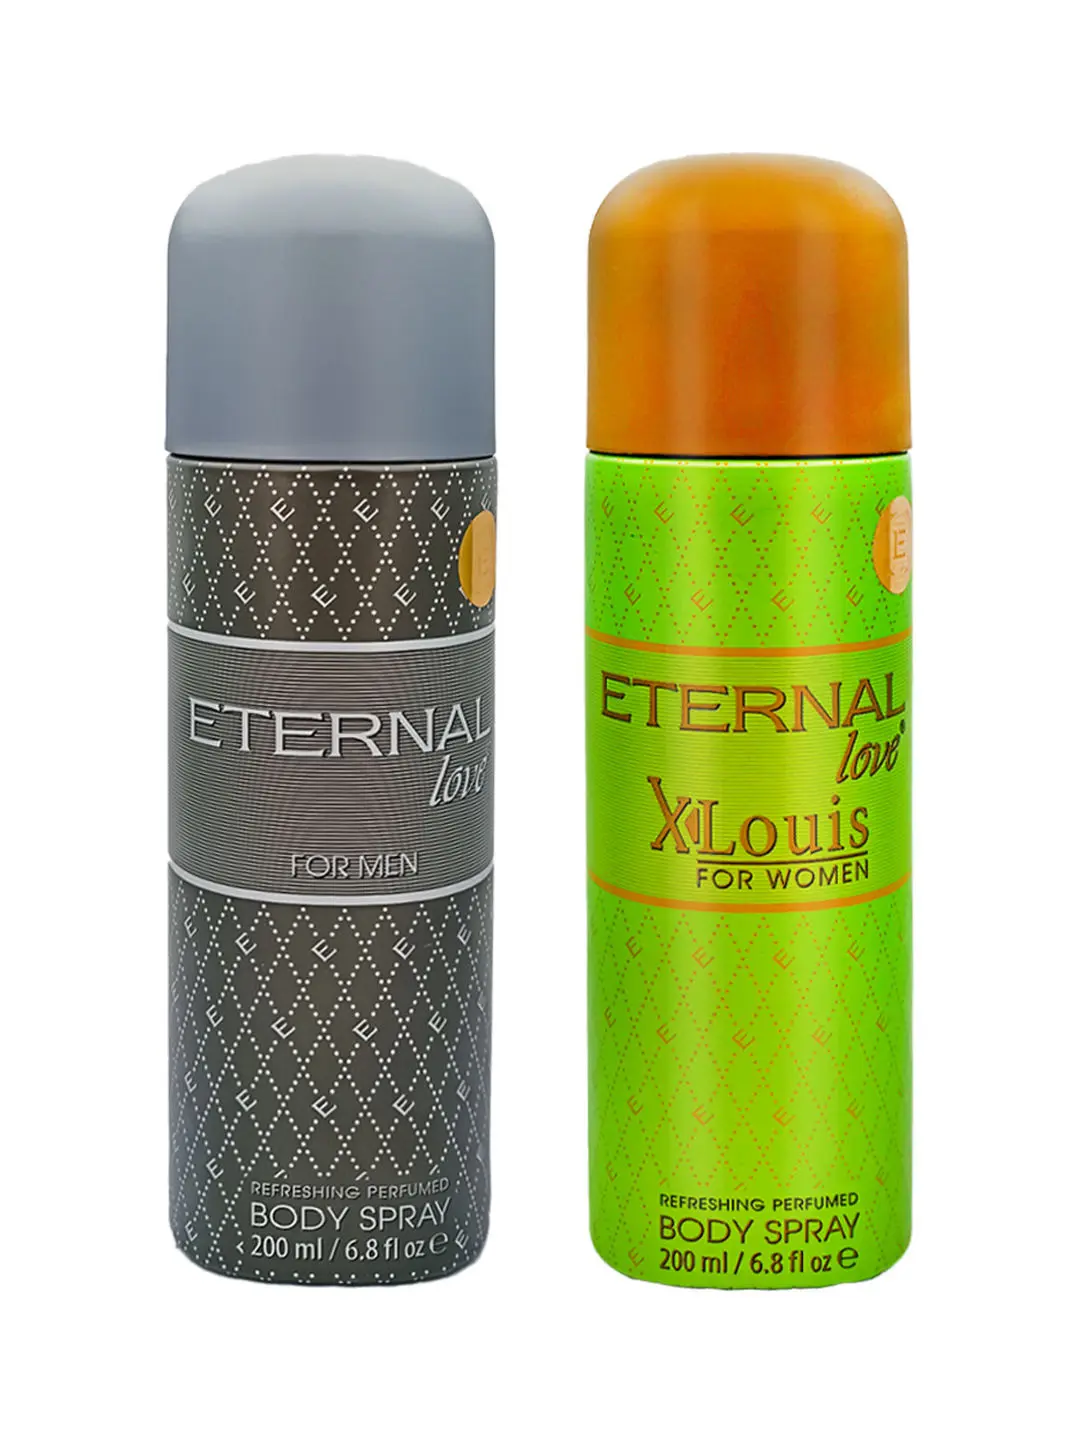 ETERNAL Love for Men Deodorant Perfumed Bodyspray, 200ml & X-Louis for Women Deodorant Perfumed Bodyspray, 200ml